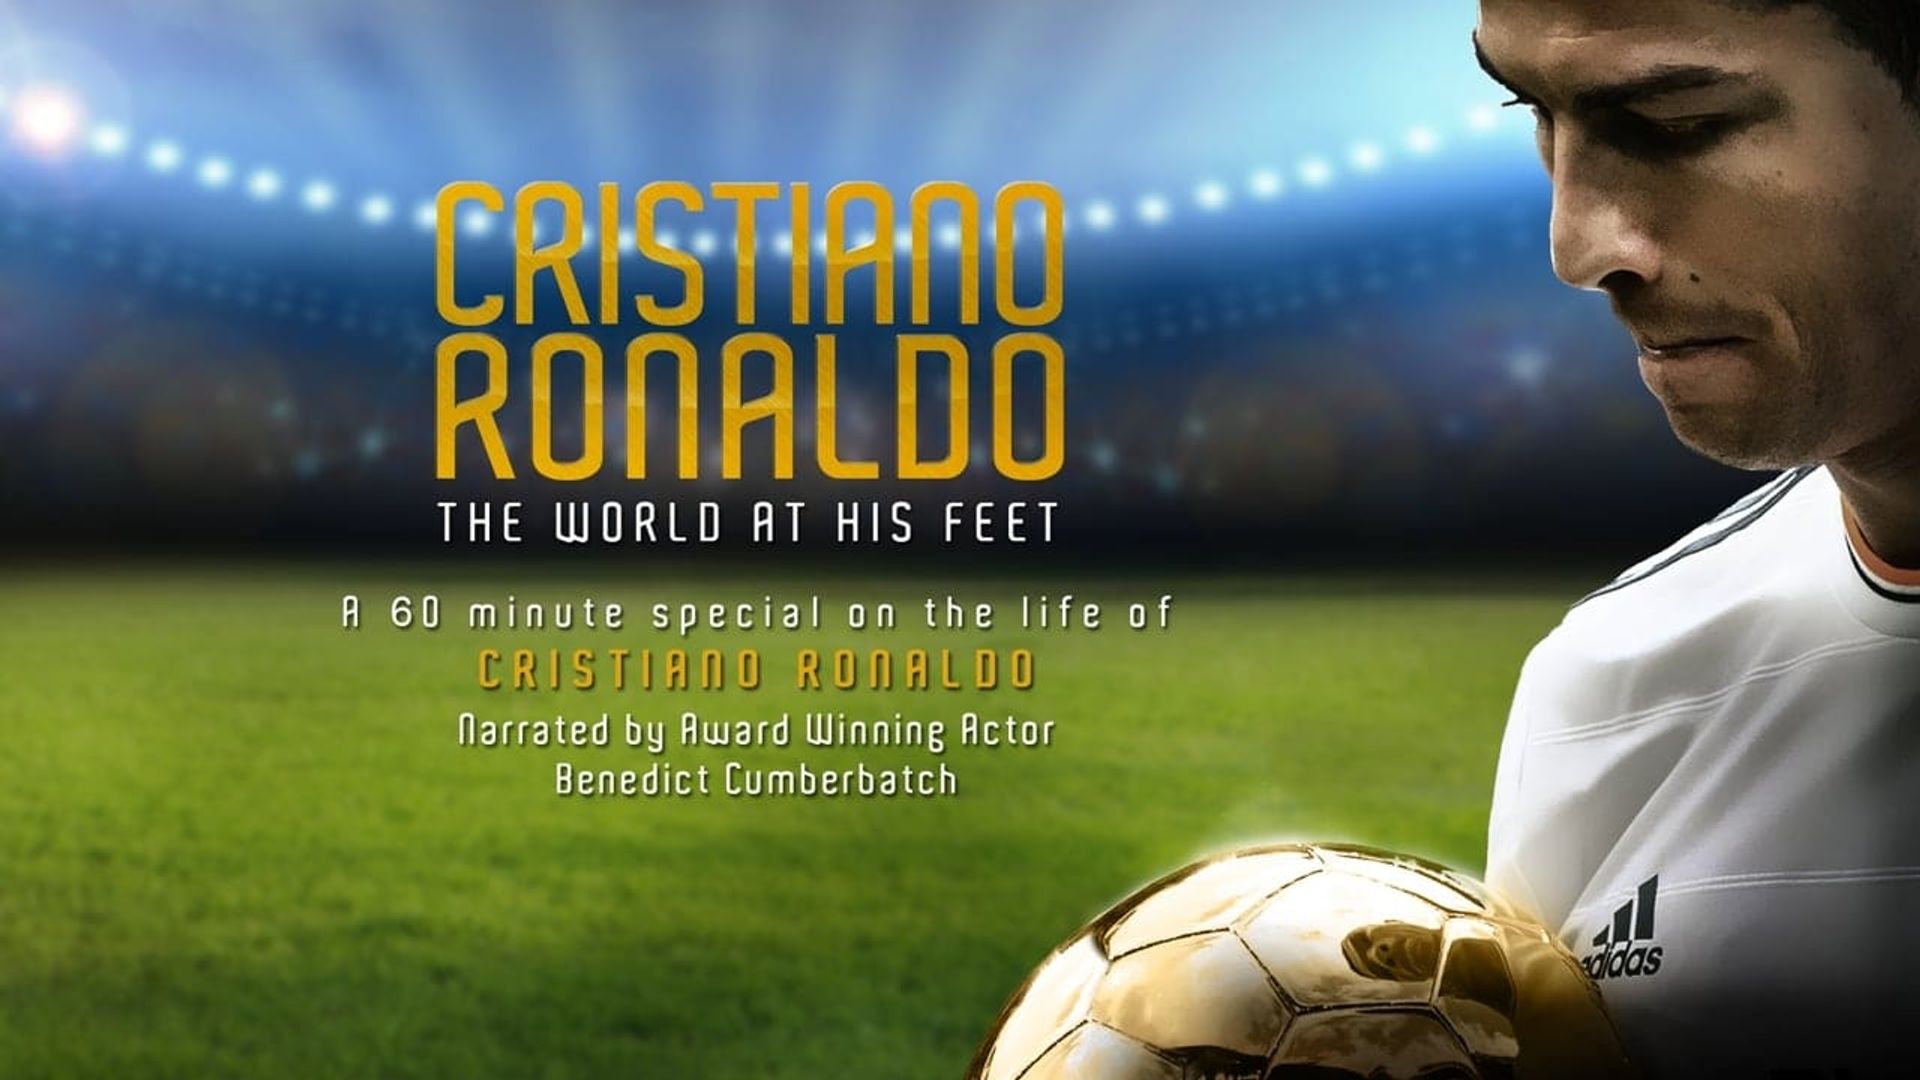 Cristiano Ronaldo: World at His Feet background